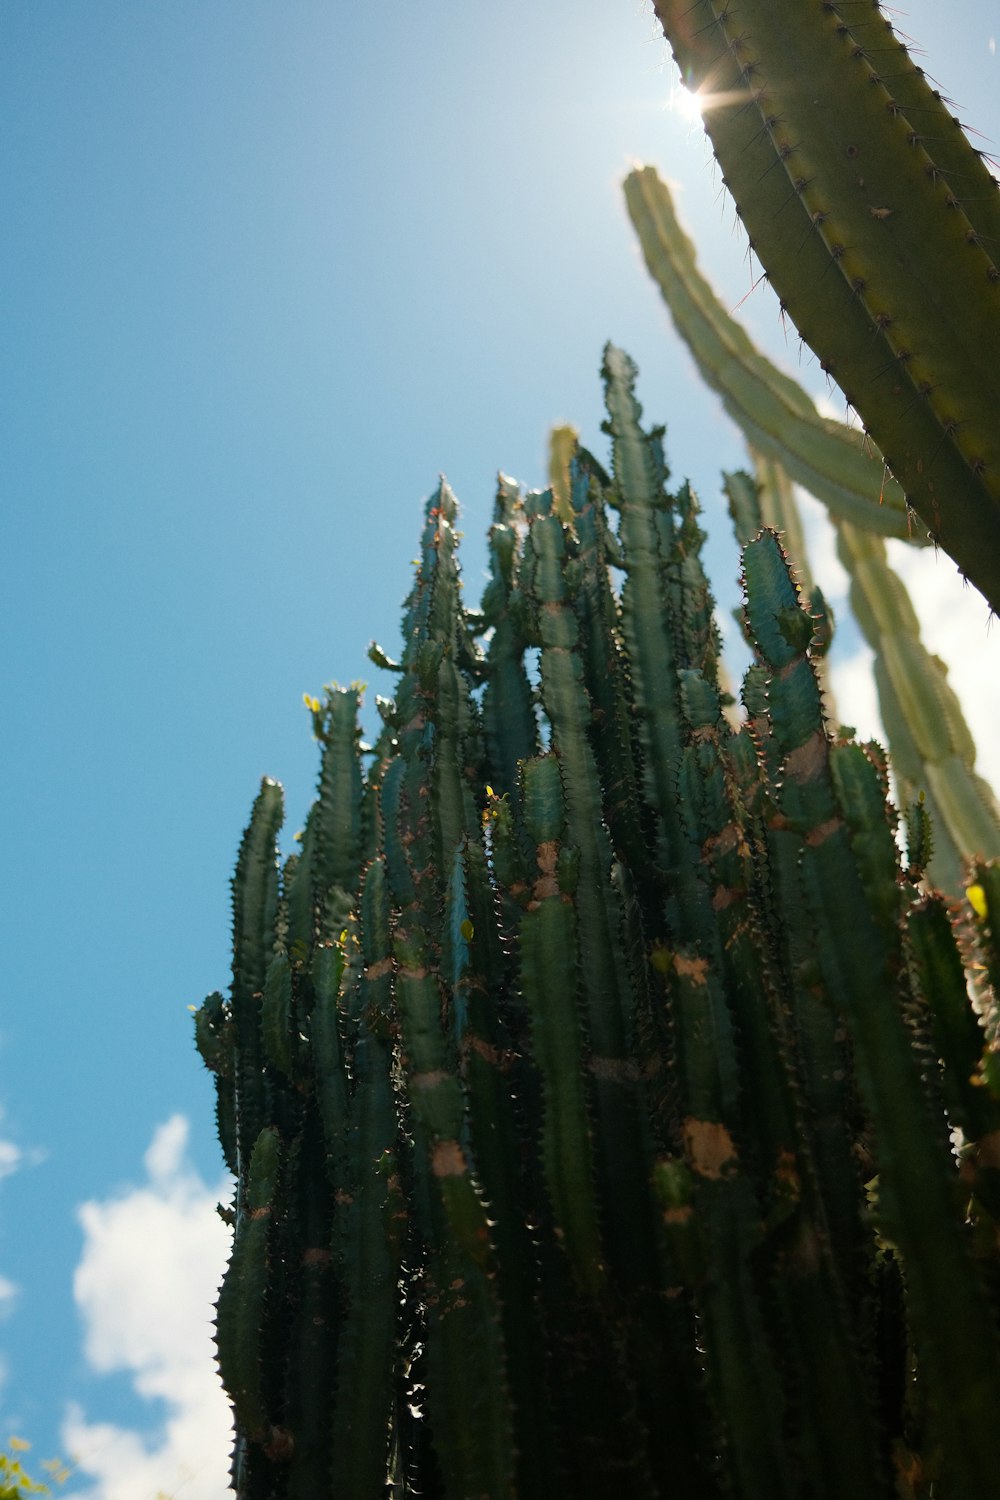 Un groupe de cactus